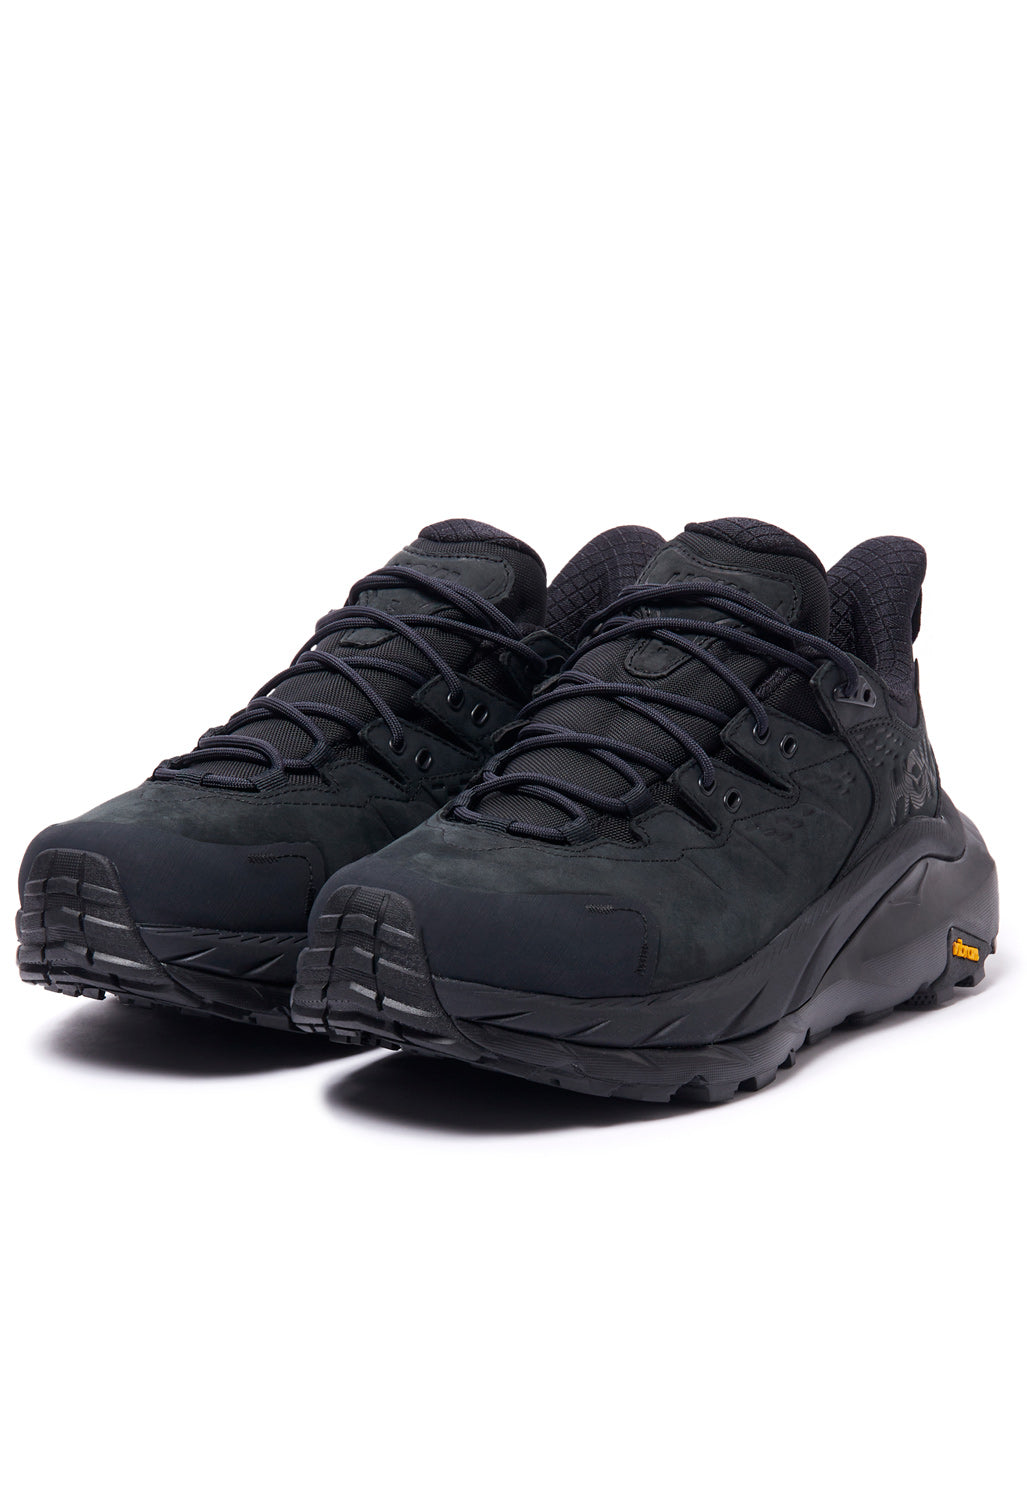 Hoka Kaha 2 Low GORE-TEX Men's Shoes - Black / Black